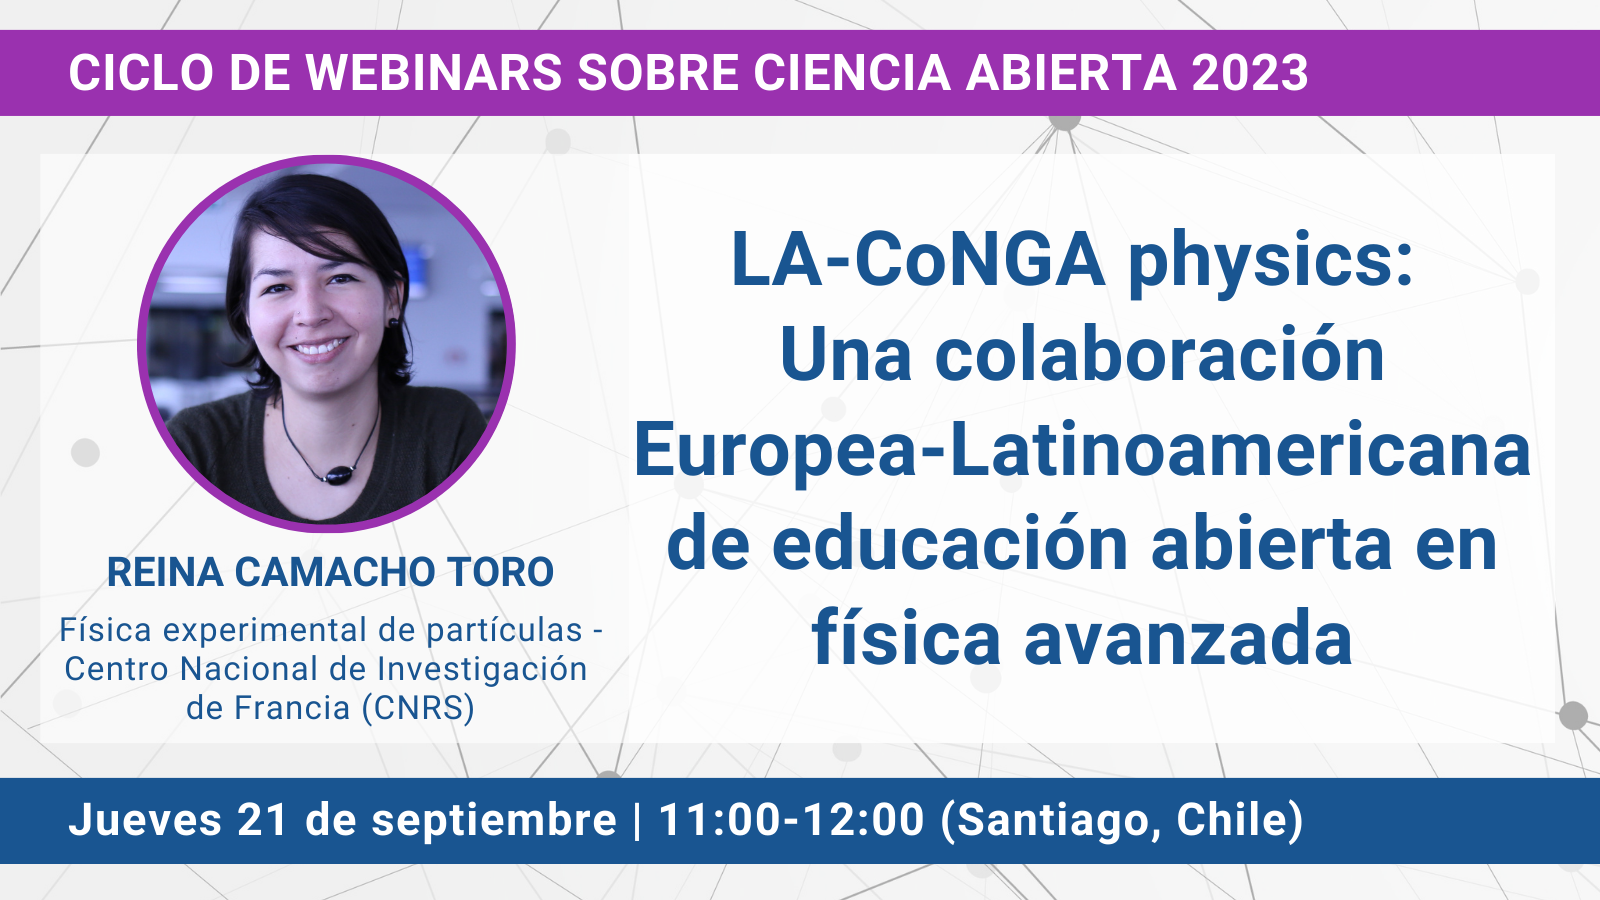 A-CoNGA physics: una colaboración Europea-Latinoamericana de educación abierta en física avanzada 